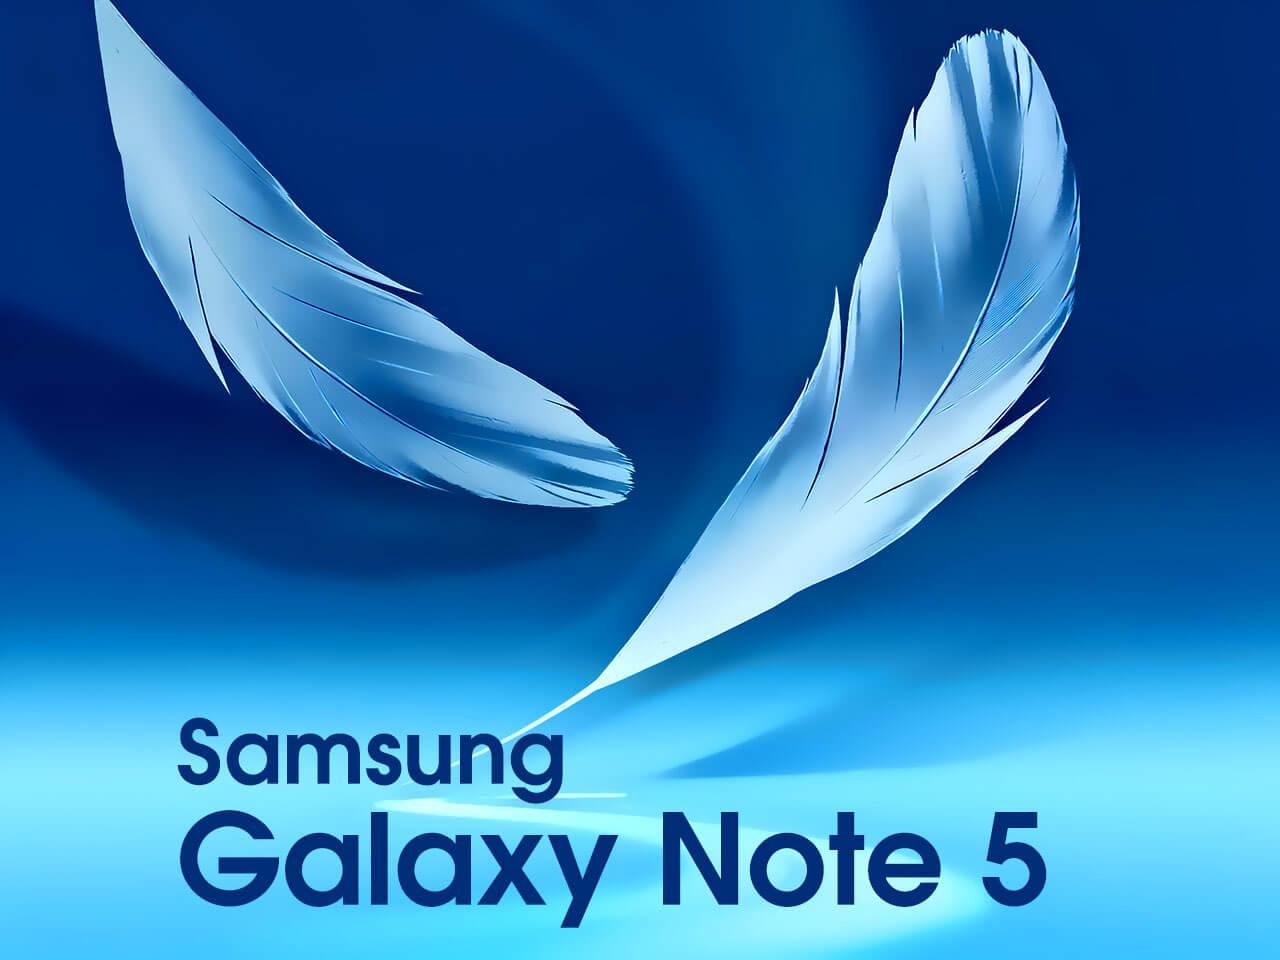 Samsung Galaxy Note 5 Logo - youmobileorg's Blog